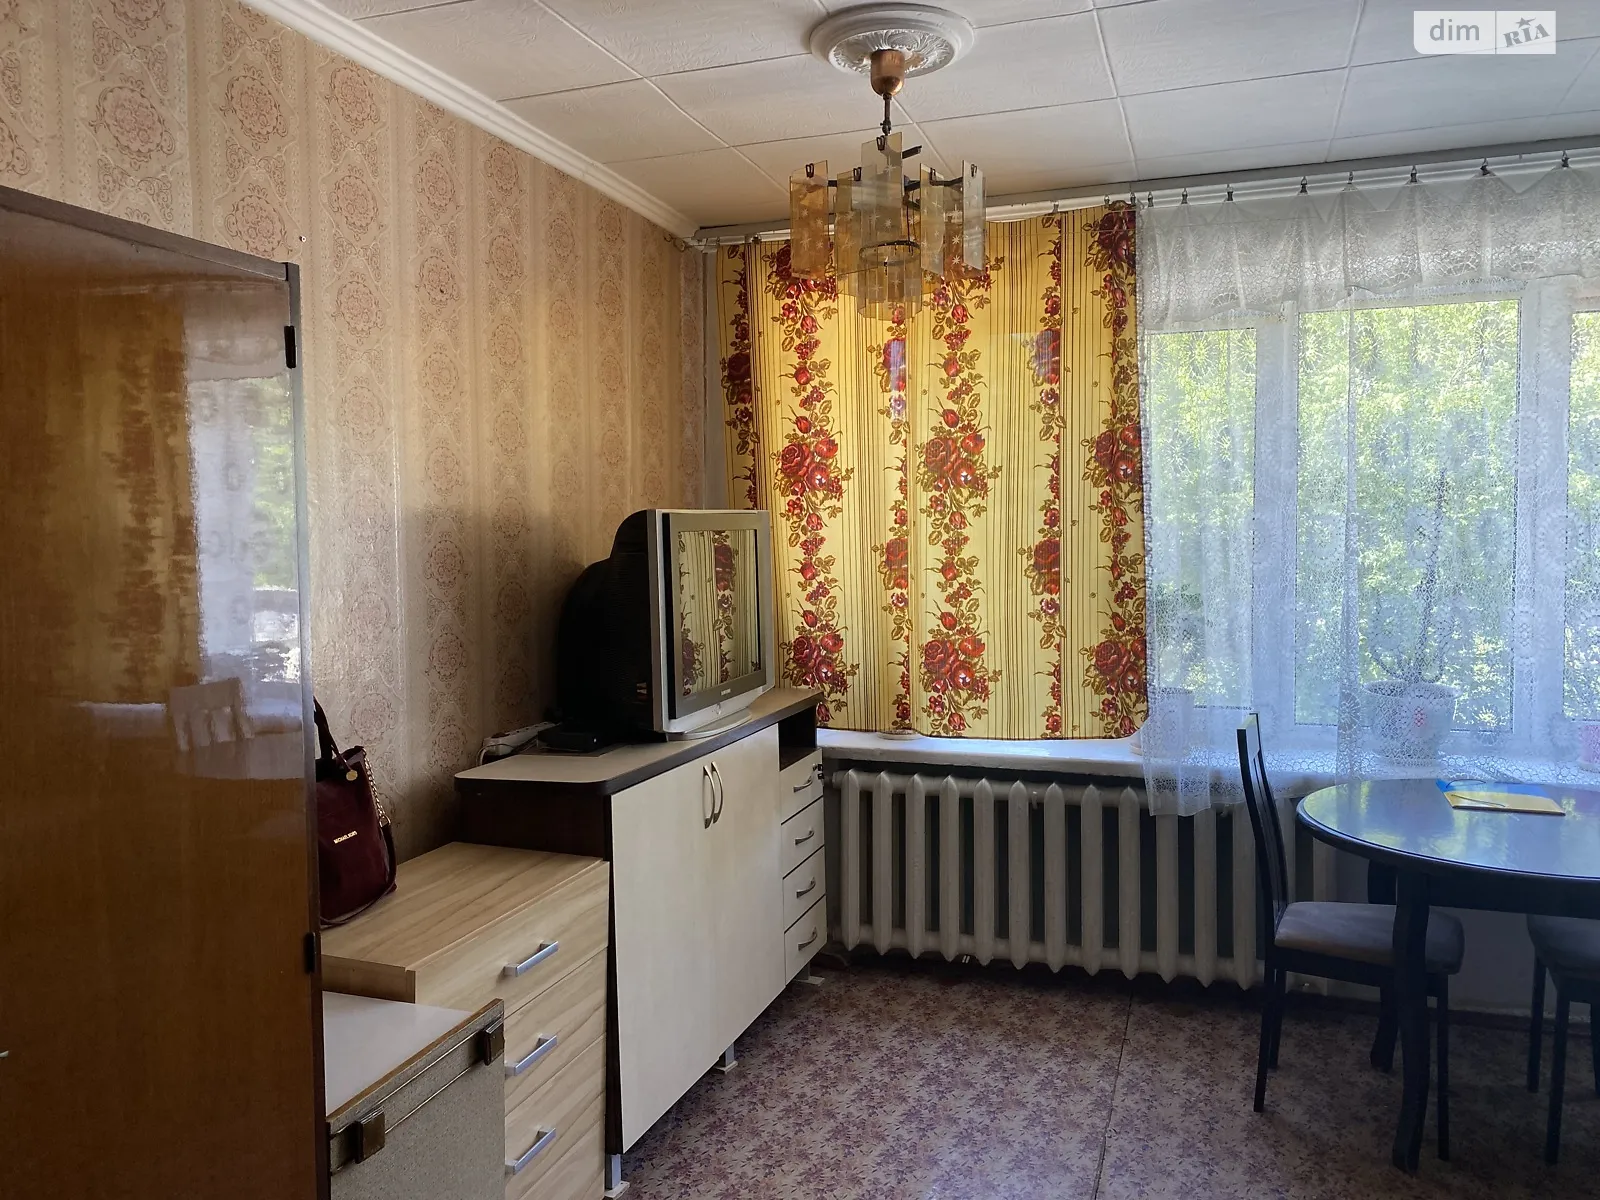 Продается комната 24.1 кв. м в Черкассах - фото 4